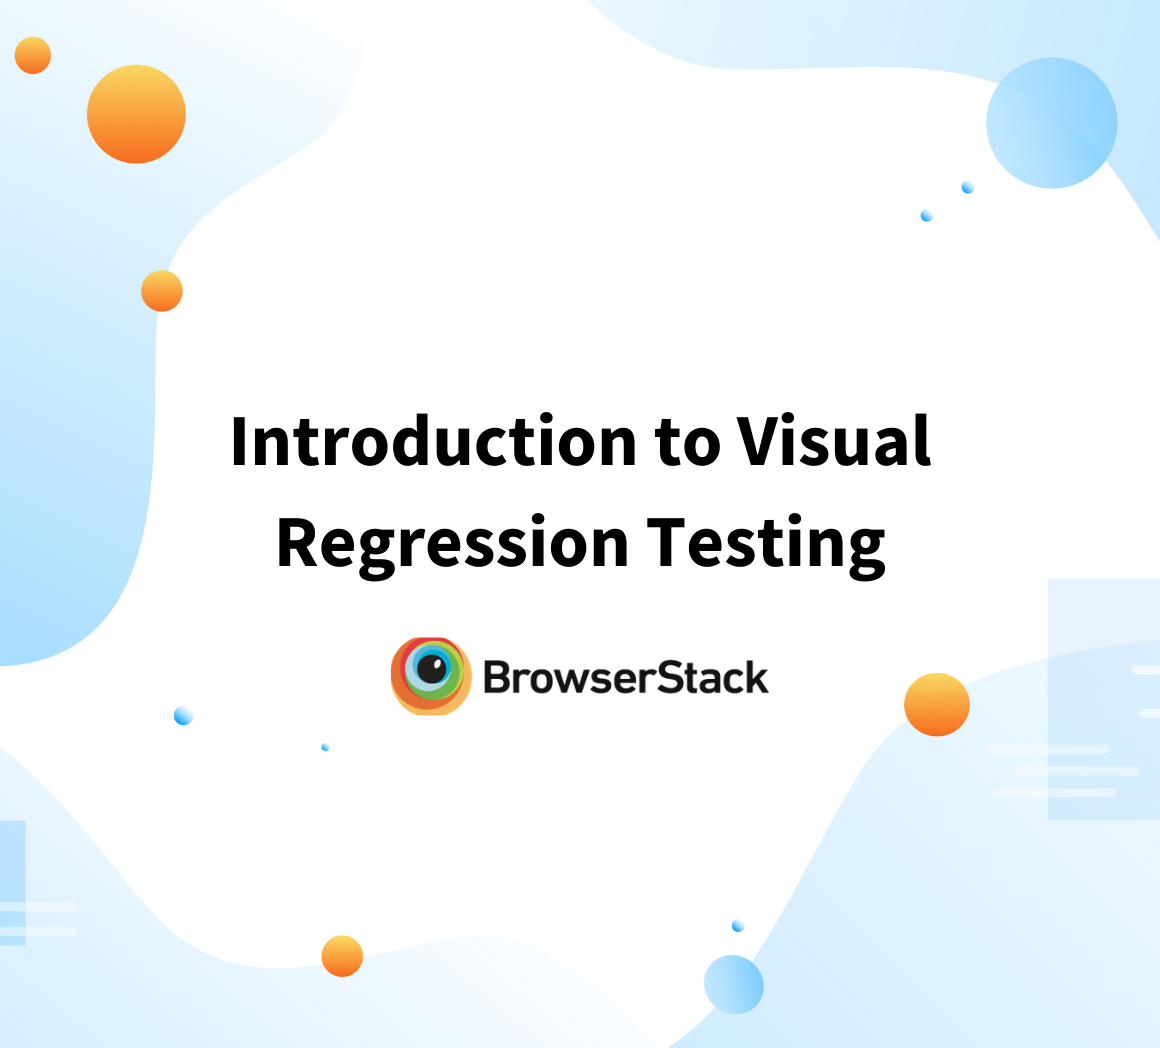 Visual Regression Testing 101